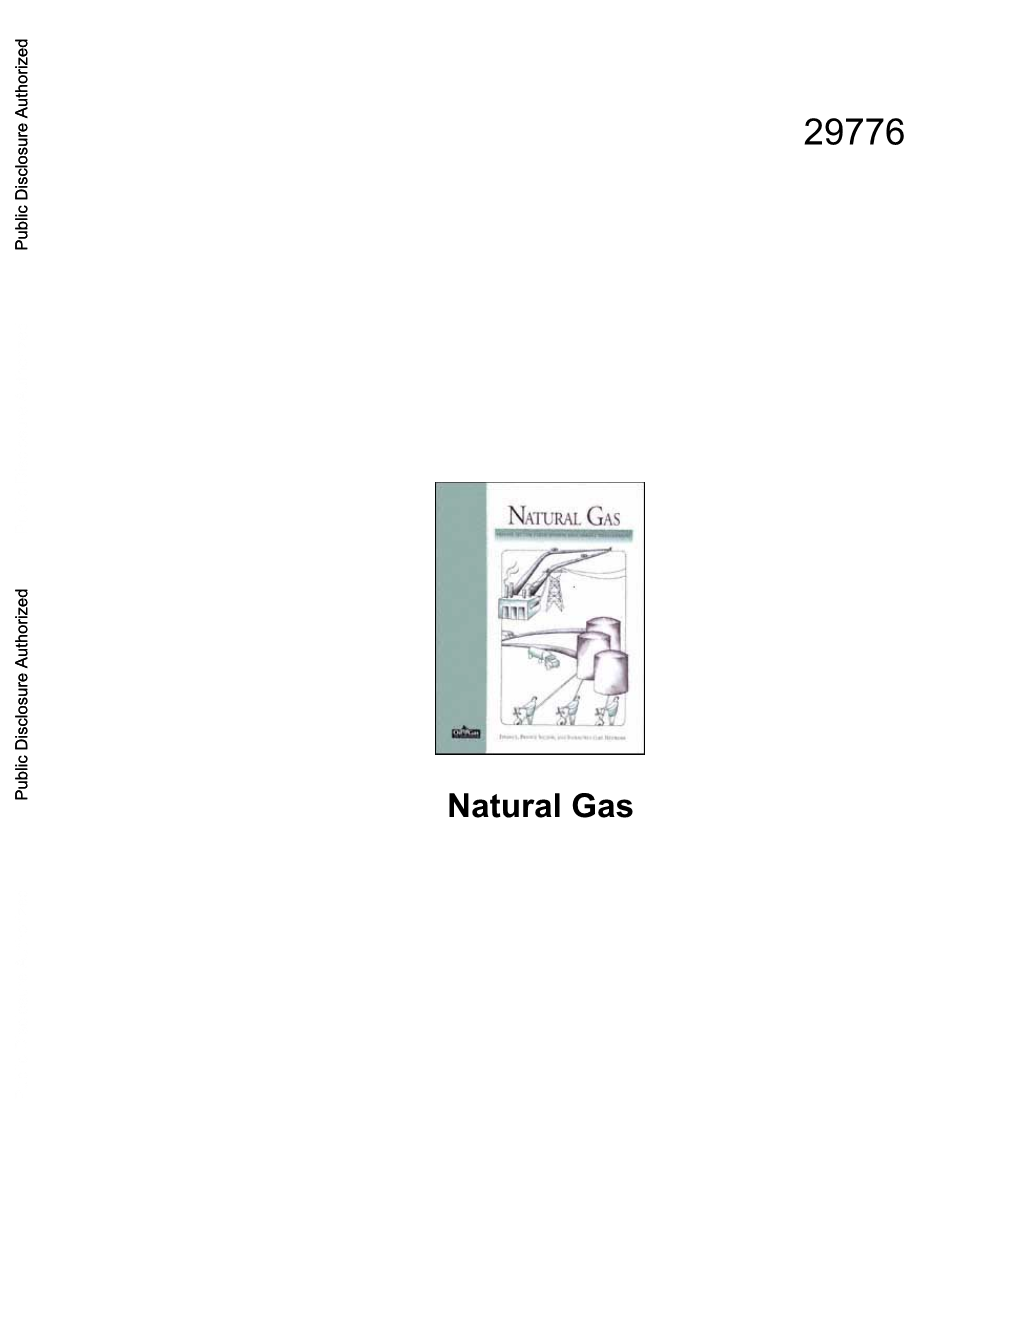 Natural Gas Public Disclosure Authorized Natural Gas